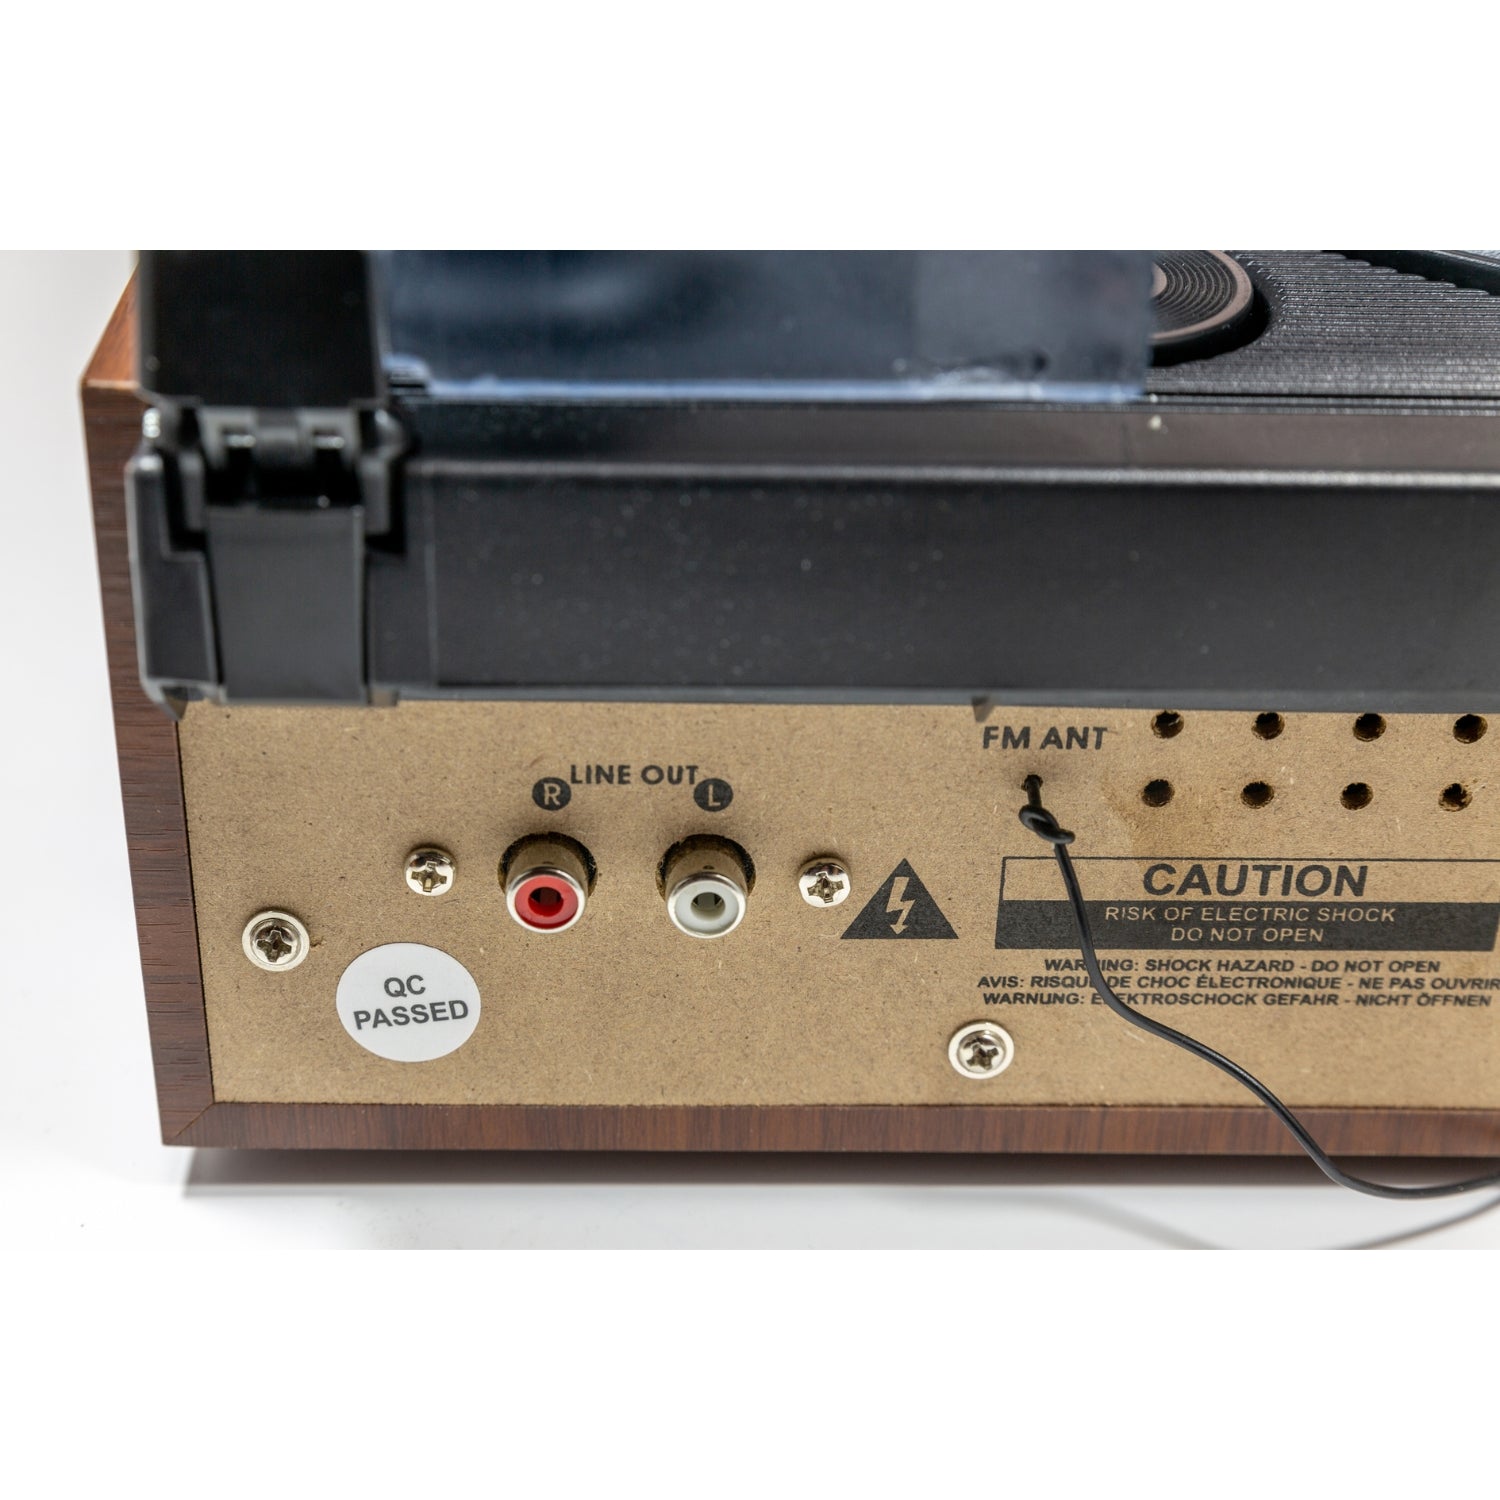 Soundmaster PL186H turntable radio built-in speakers headphone jack retro nostalgia